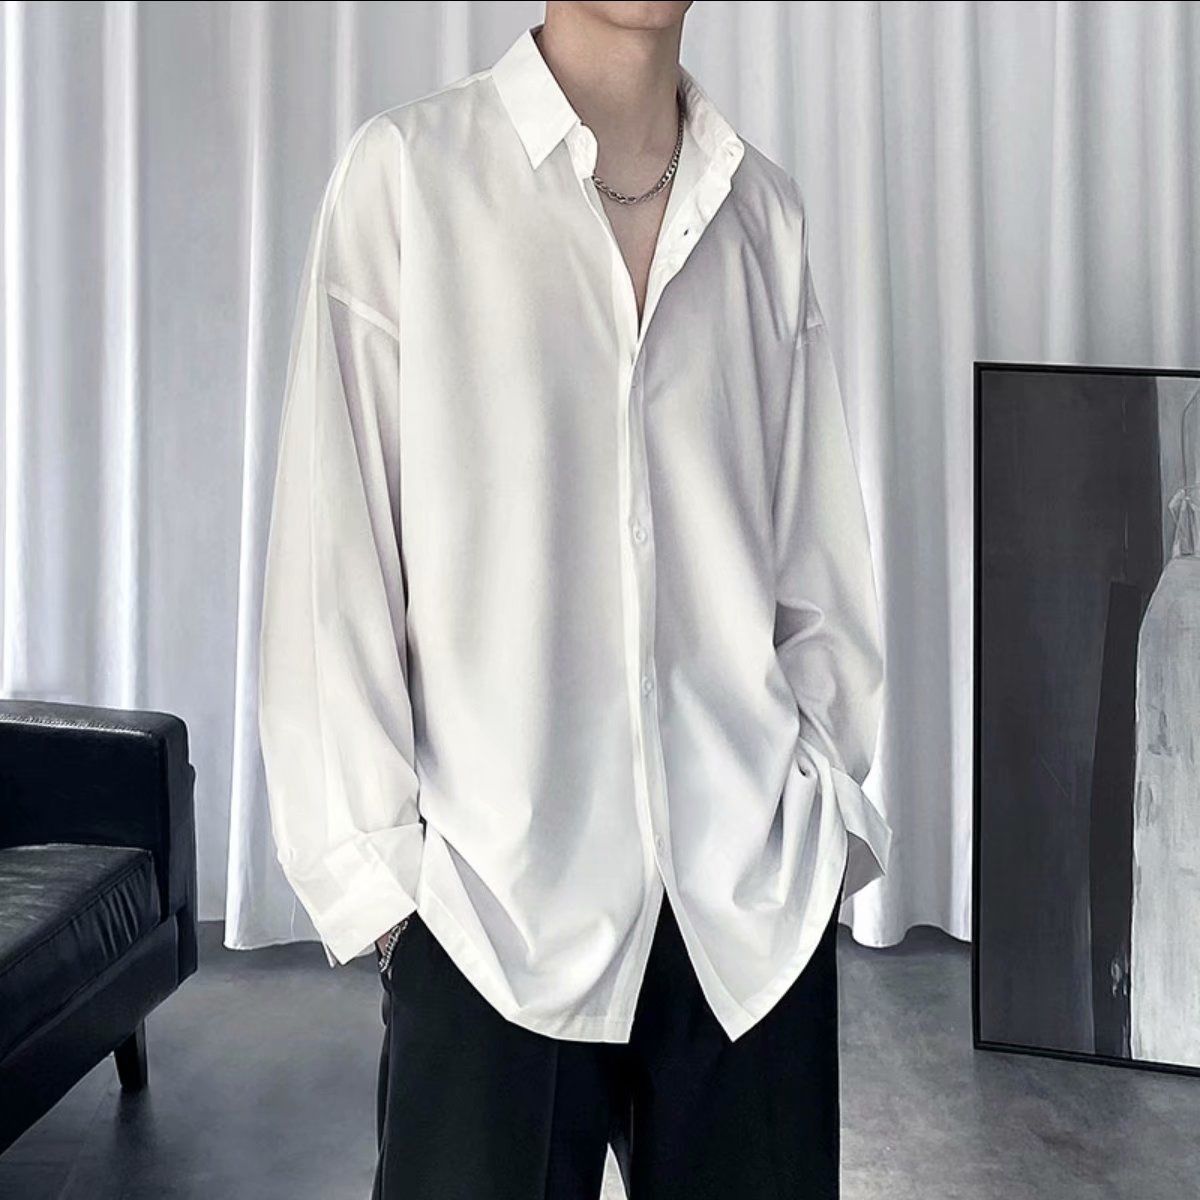 Very Fairy Shirt Male Ruffian Handsome Black Korean Trendy Inch Shirt Long Sleeve Loose Casual Drape Men's Shirt Set